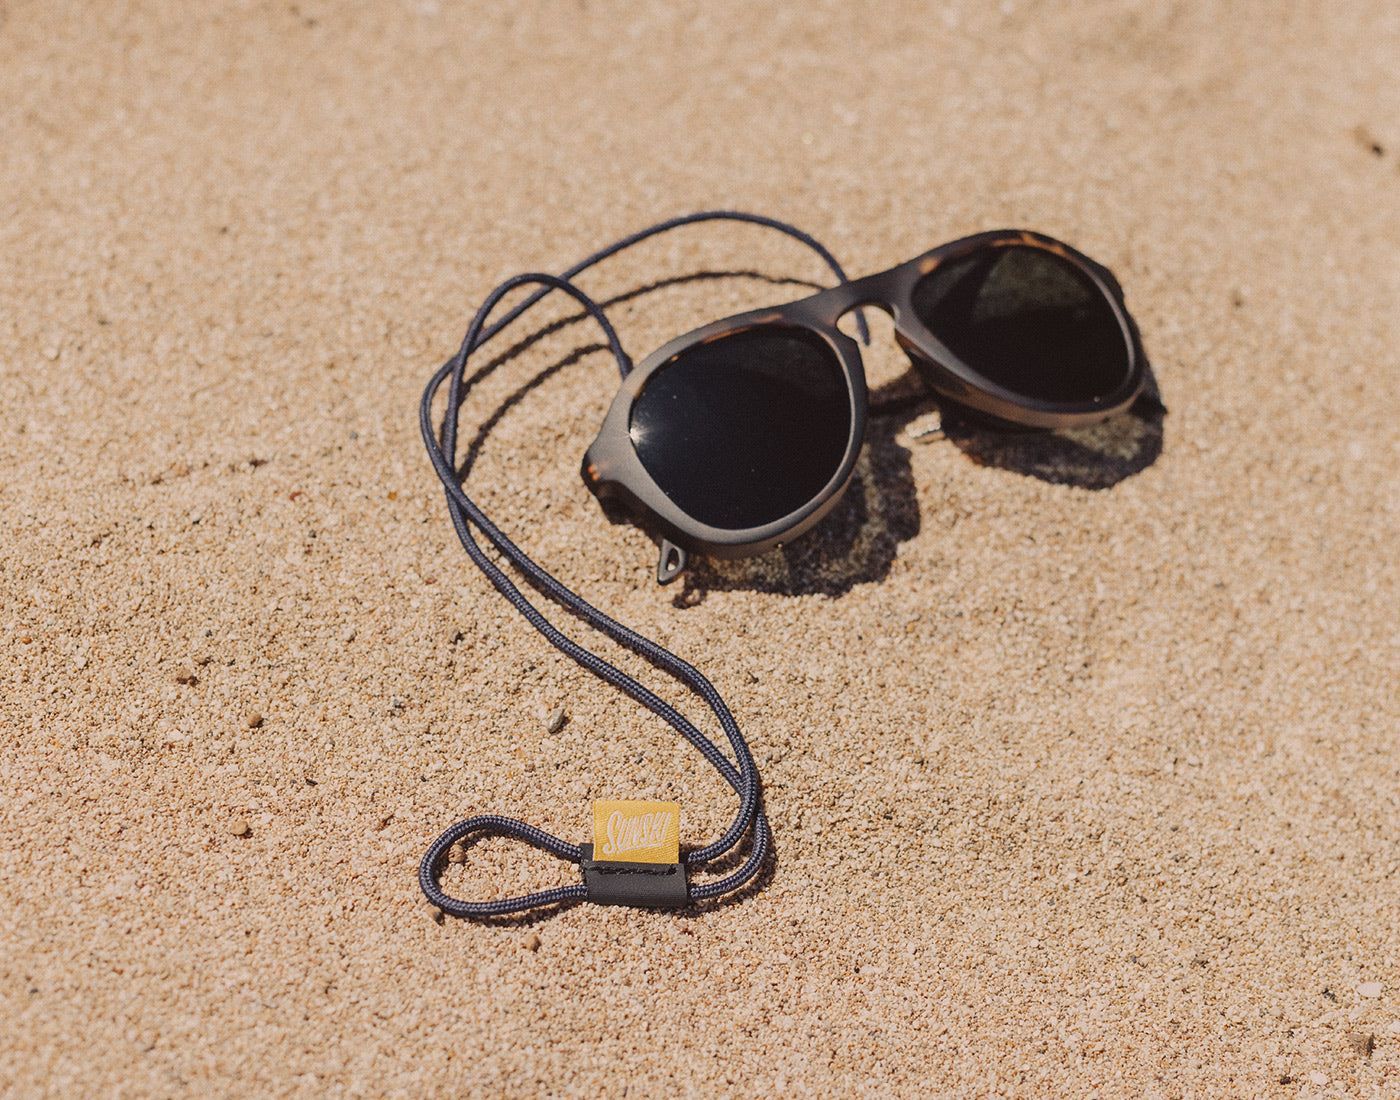 Maui Jim Night Dive Sunglasses Review - Believe in the Run